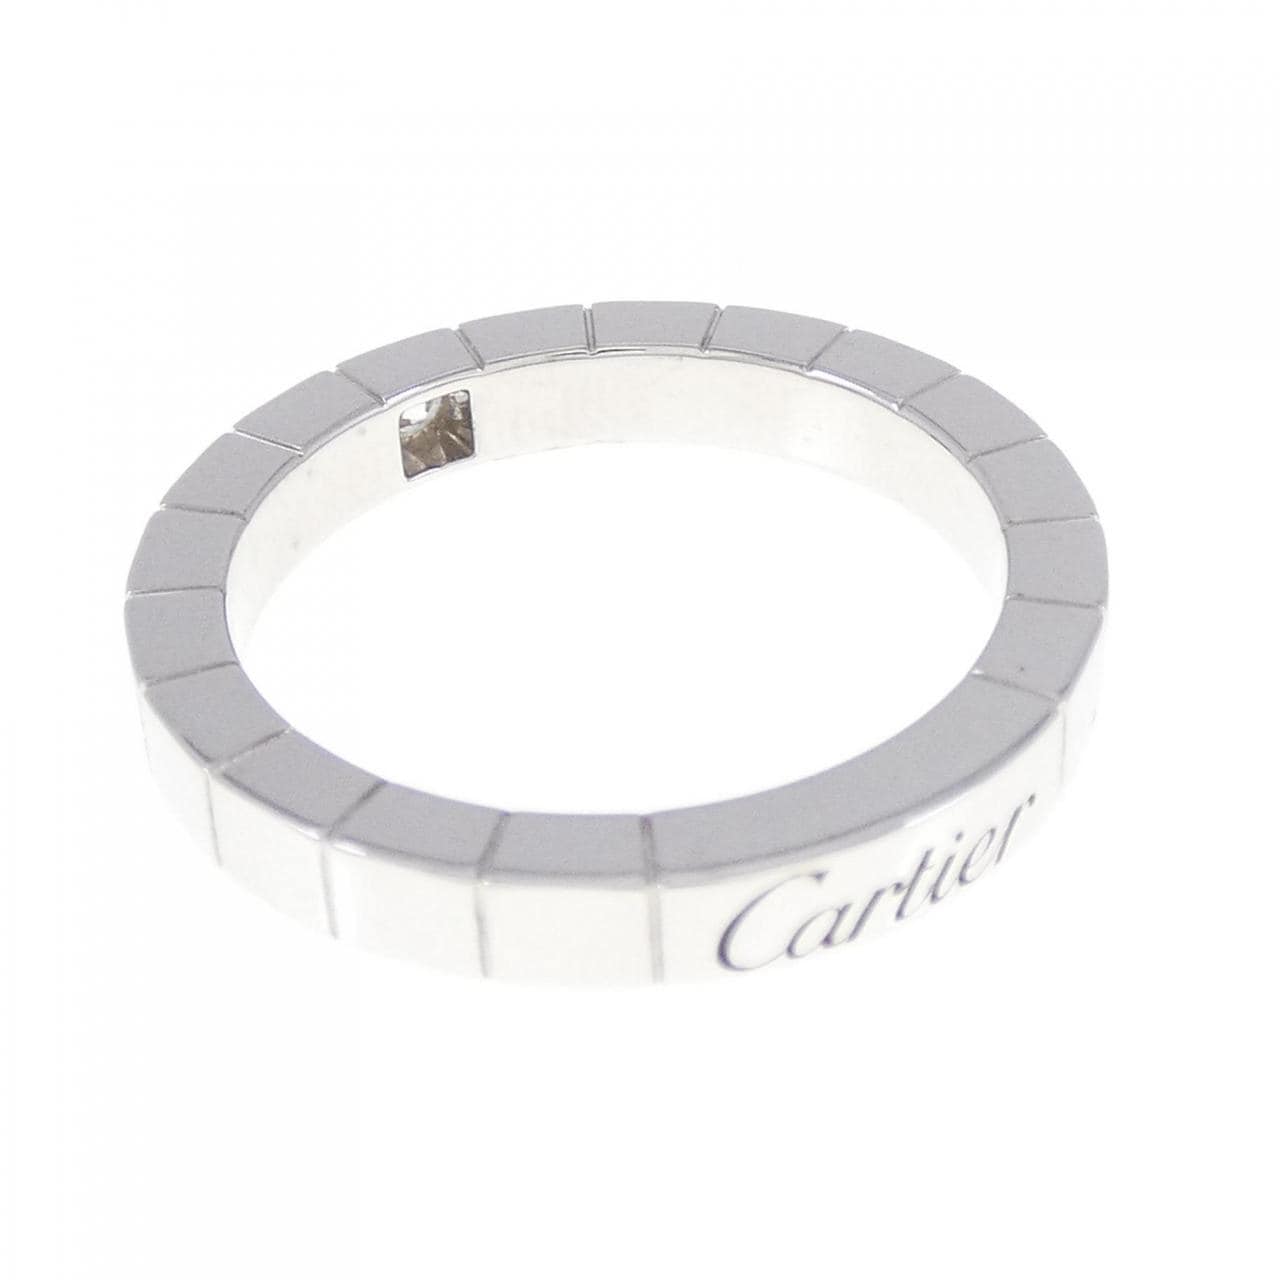 Cartier Lanieres ring